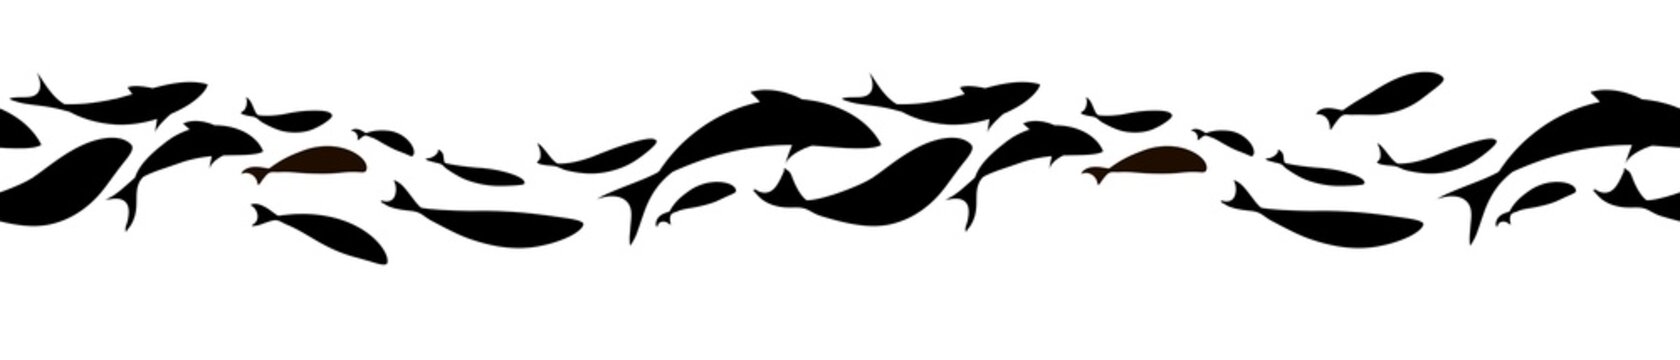 Fish horizontal black seamless pattern. Vector illustration